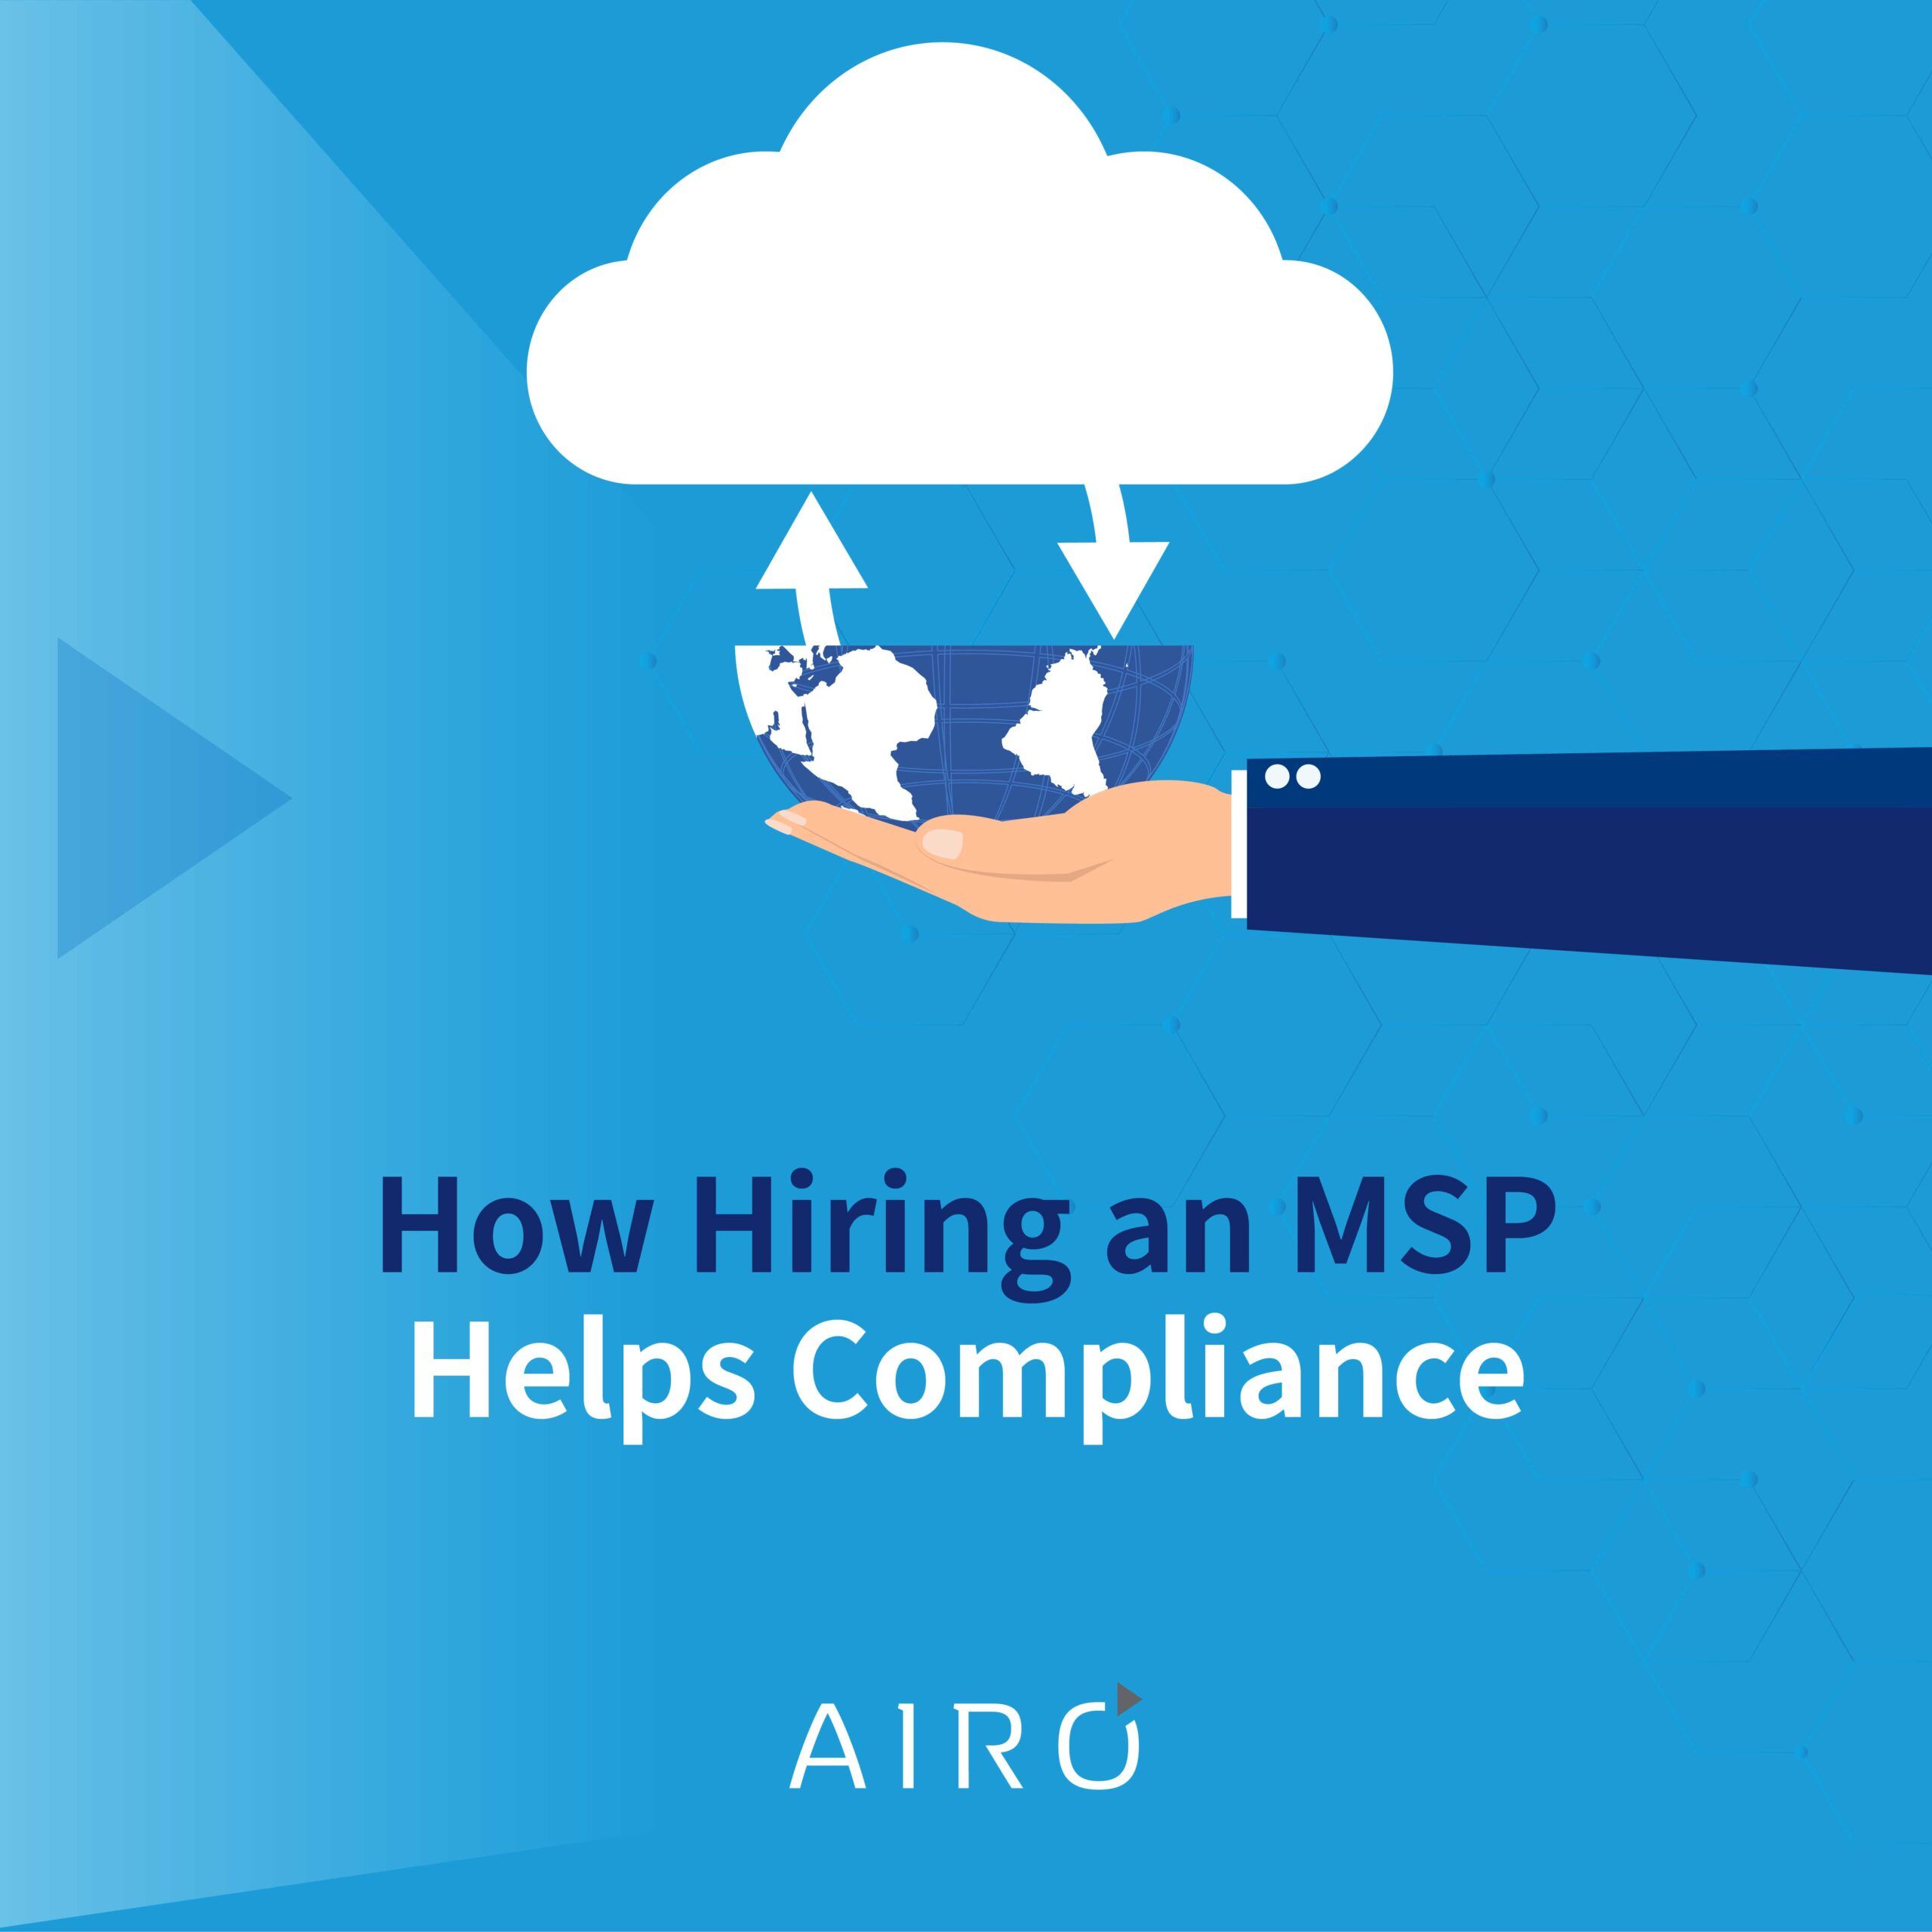 How Hiring an MSP Helps Compliance